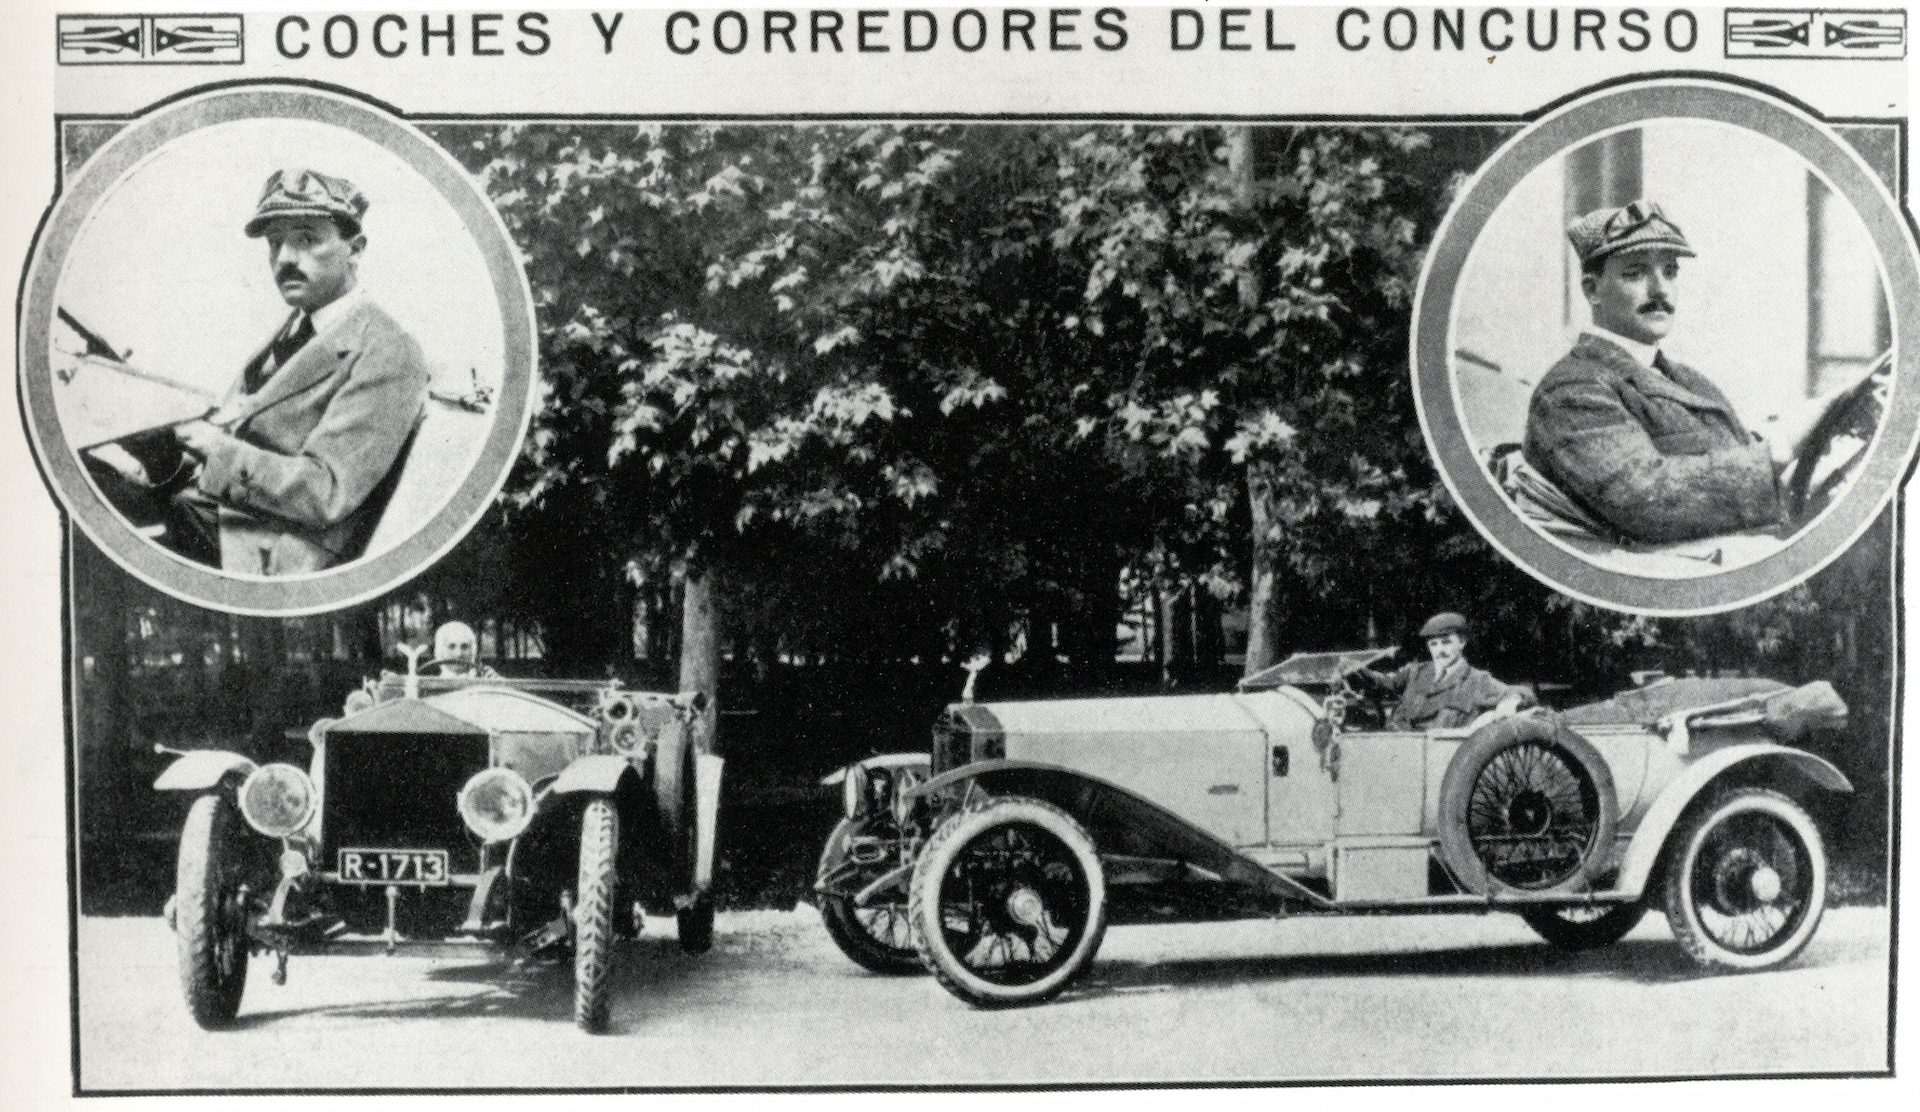 Rolls Royce 1913 Spanish Grand Prix